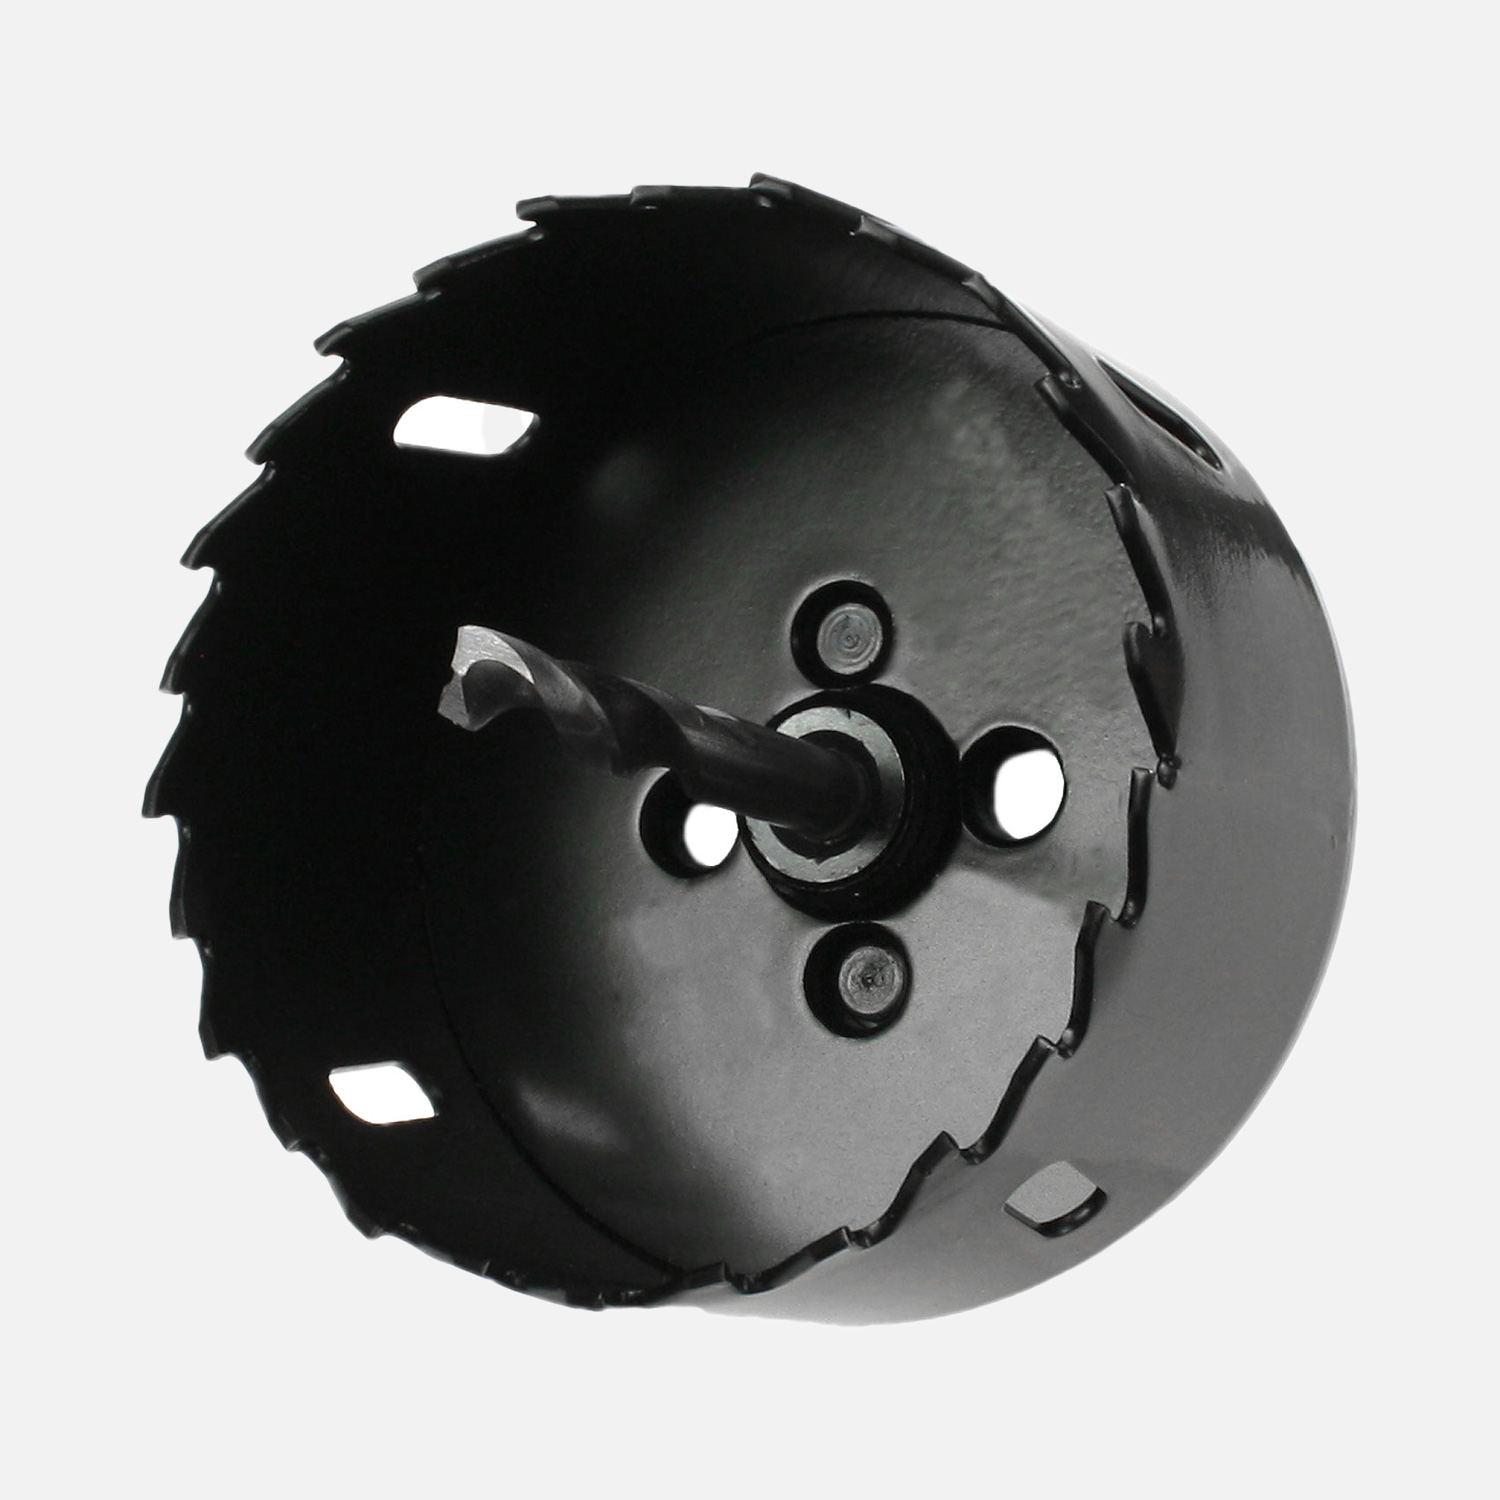 1 MPS Lochsäge - 41 mm Ø - Hartmetall - für Gipskarton & Holz geeignet